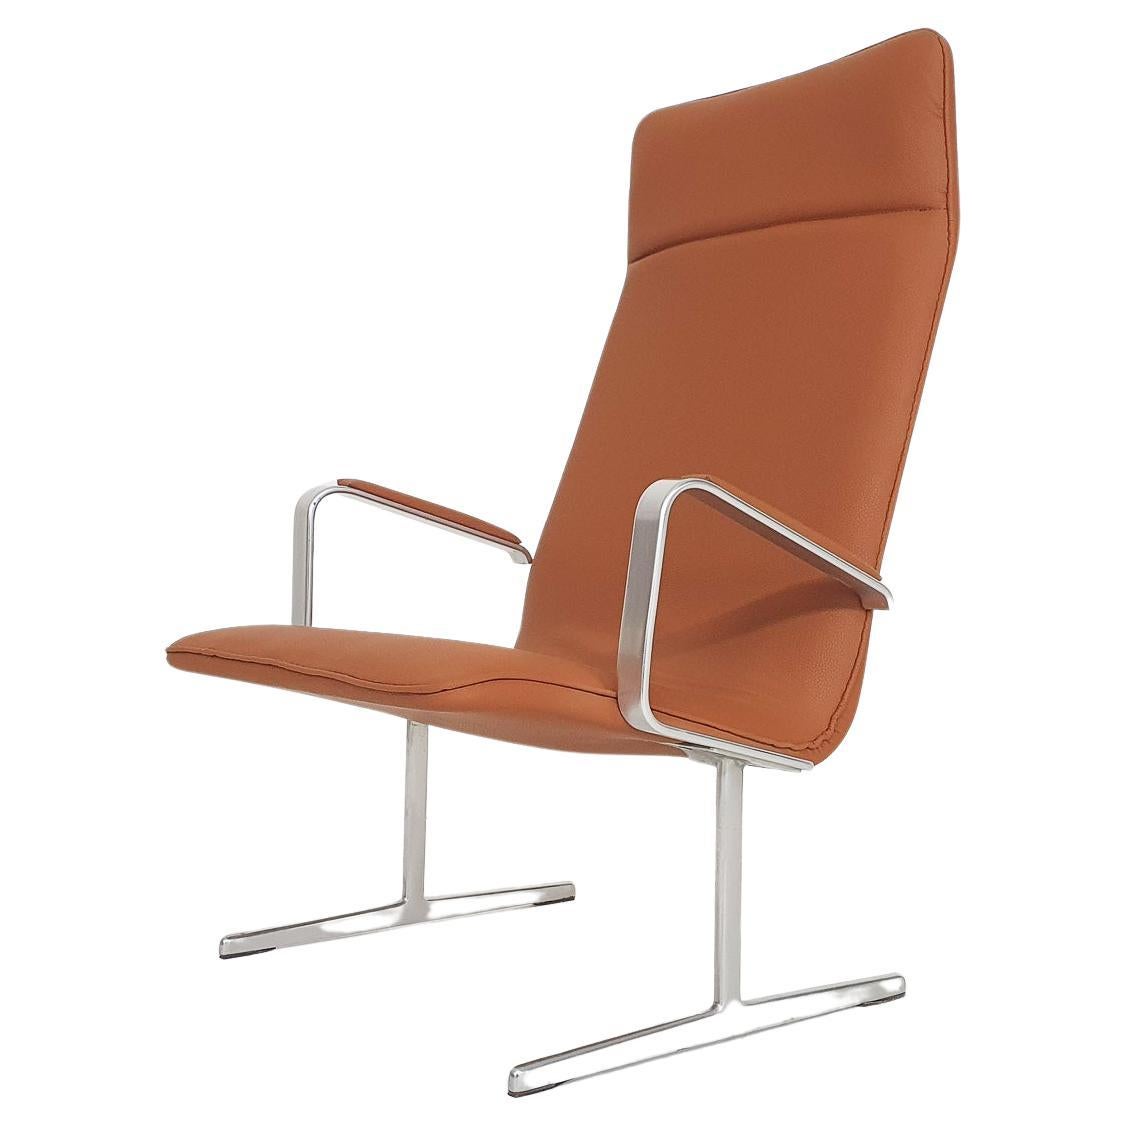 Dieter Rams for Vitsoe high back lounge chair, model rz60, Germany 1960's